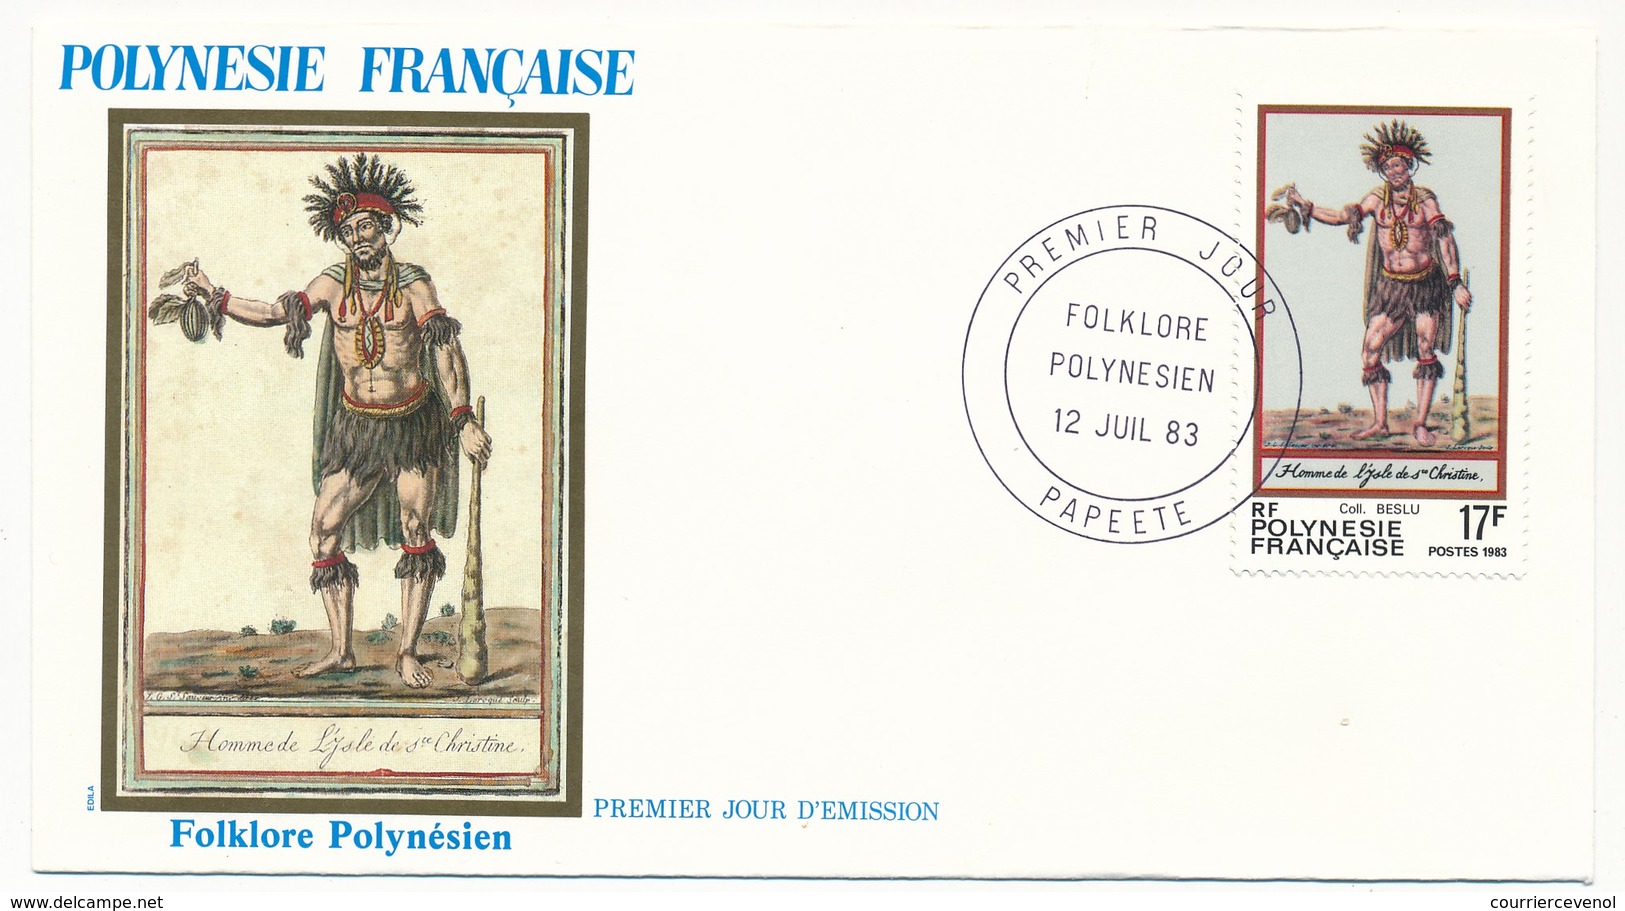 POLYNESIE FRANCAISE - 3 FDC - Folklore Polynésien - 12 Juillet 1983 - Papeete - FDC